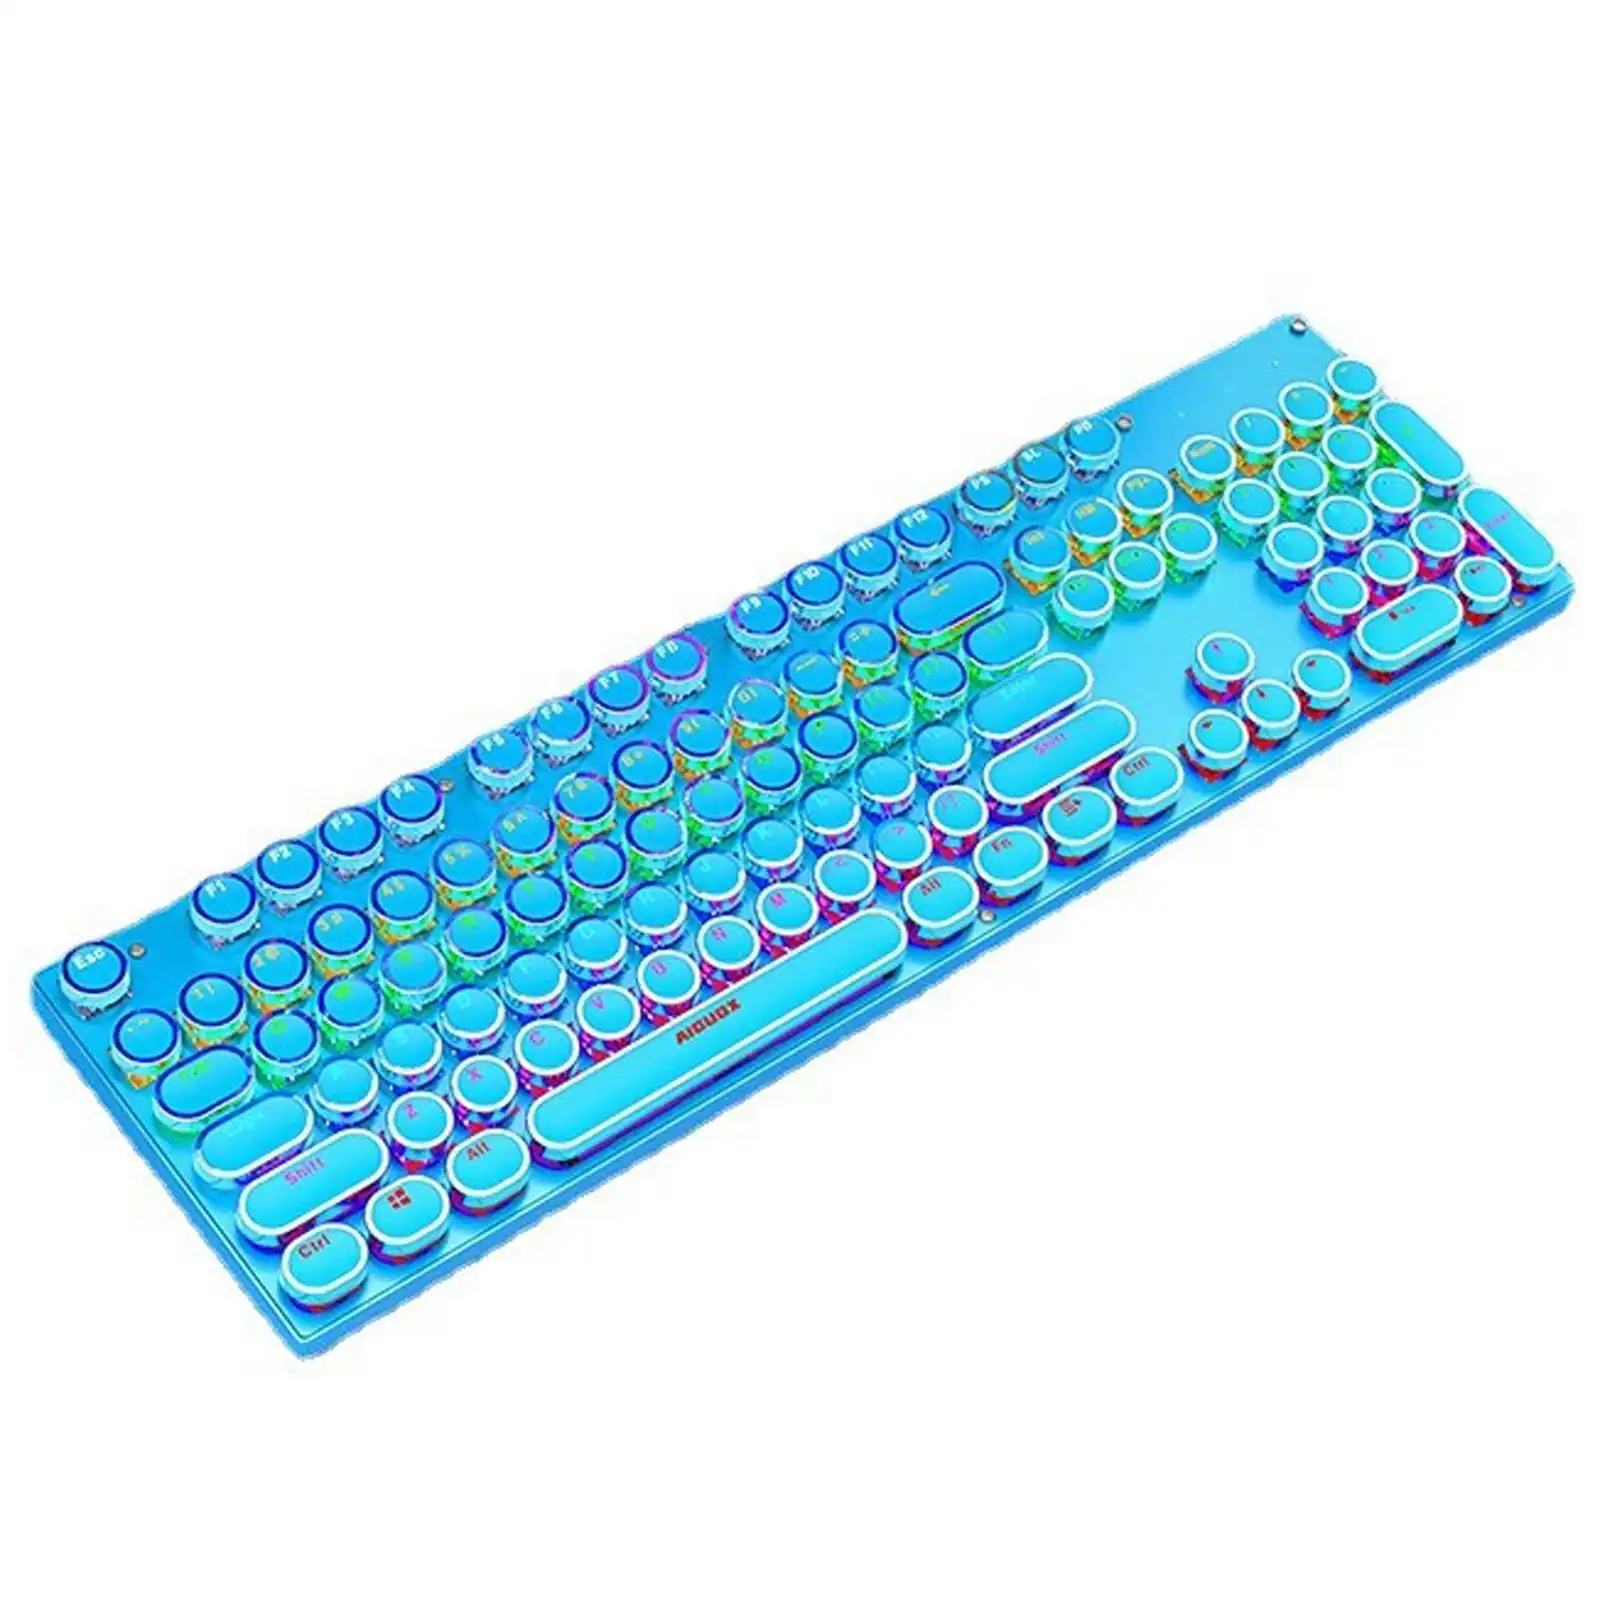 TODO Mechanical Gaming Keyboard RGB LED Linear Blue Switch USB Windows - Blue